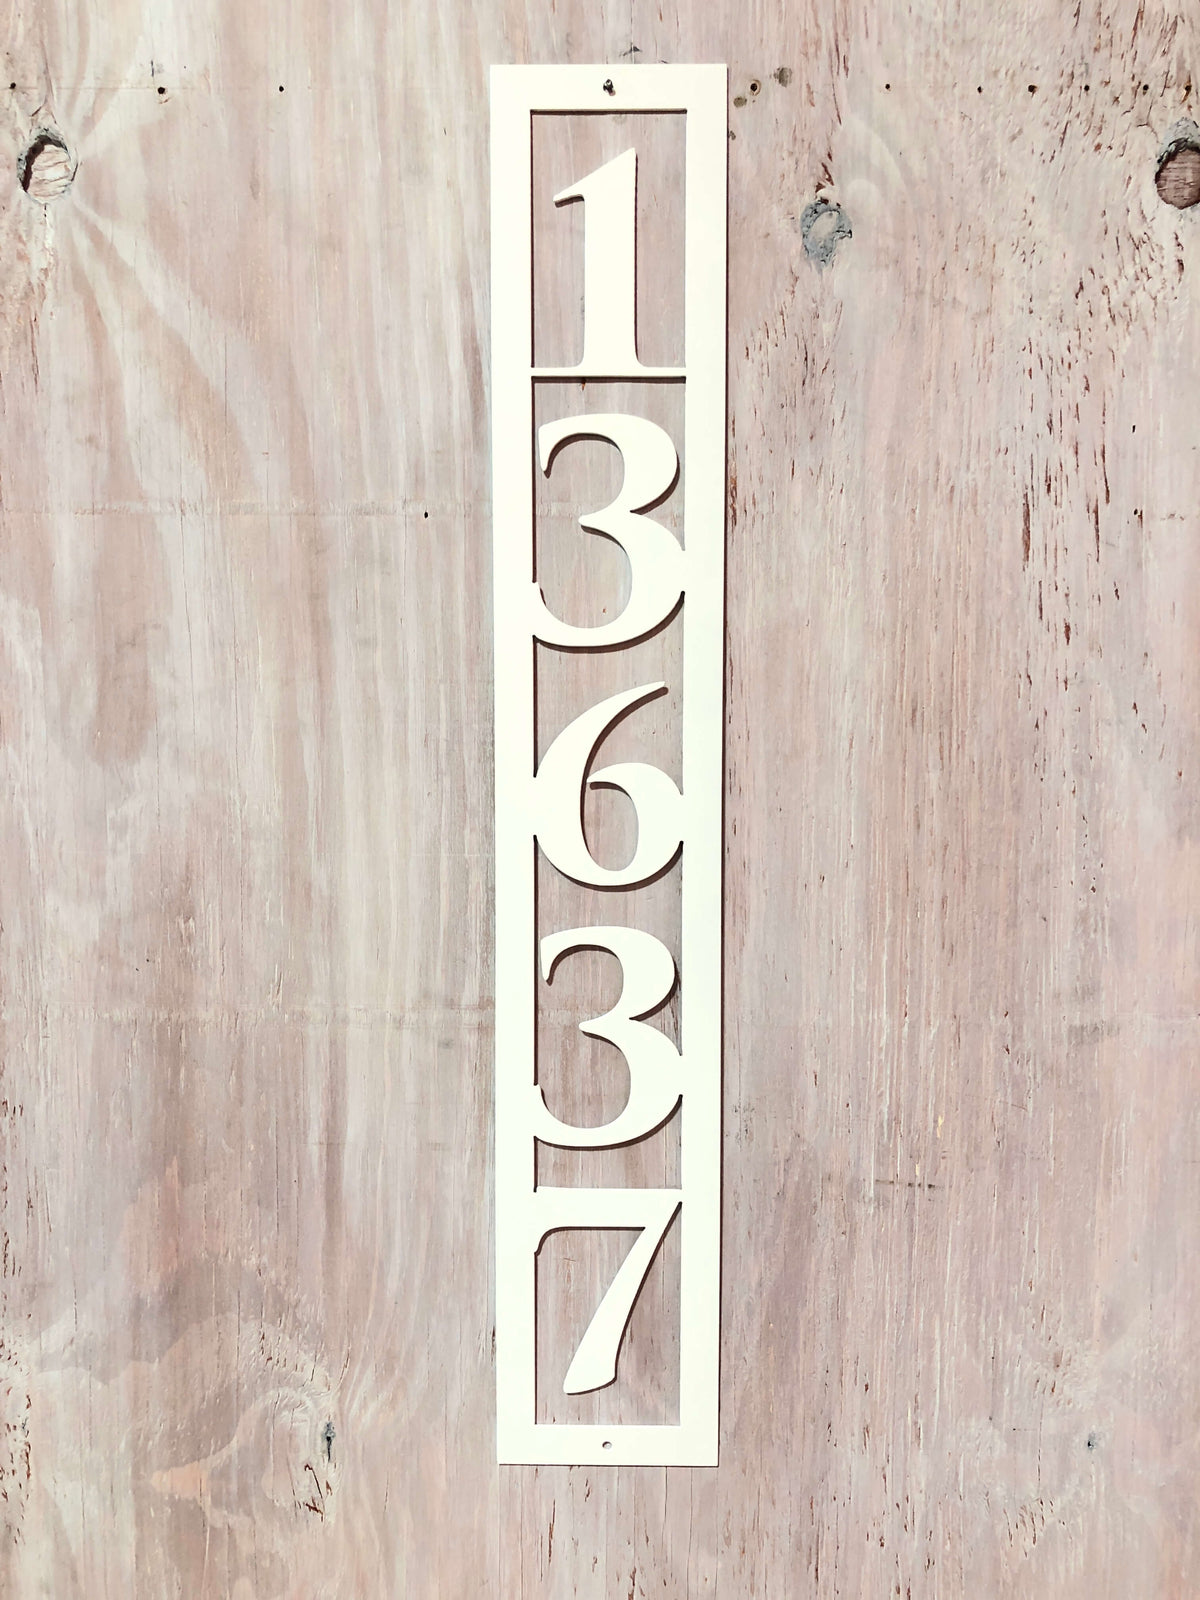 Vertical Address Marker | #1004